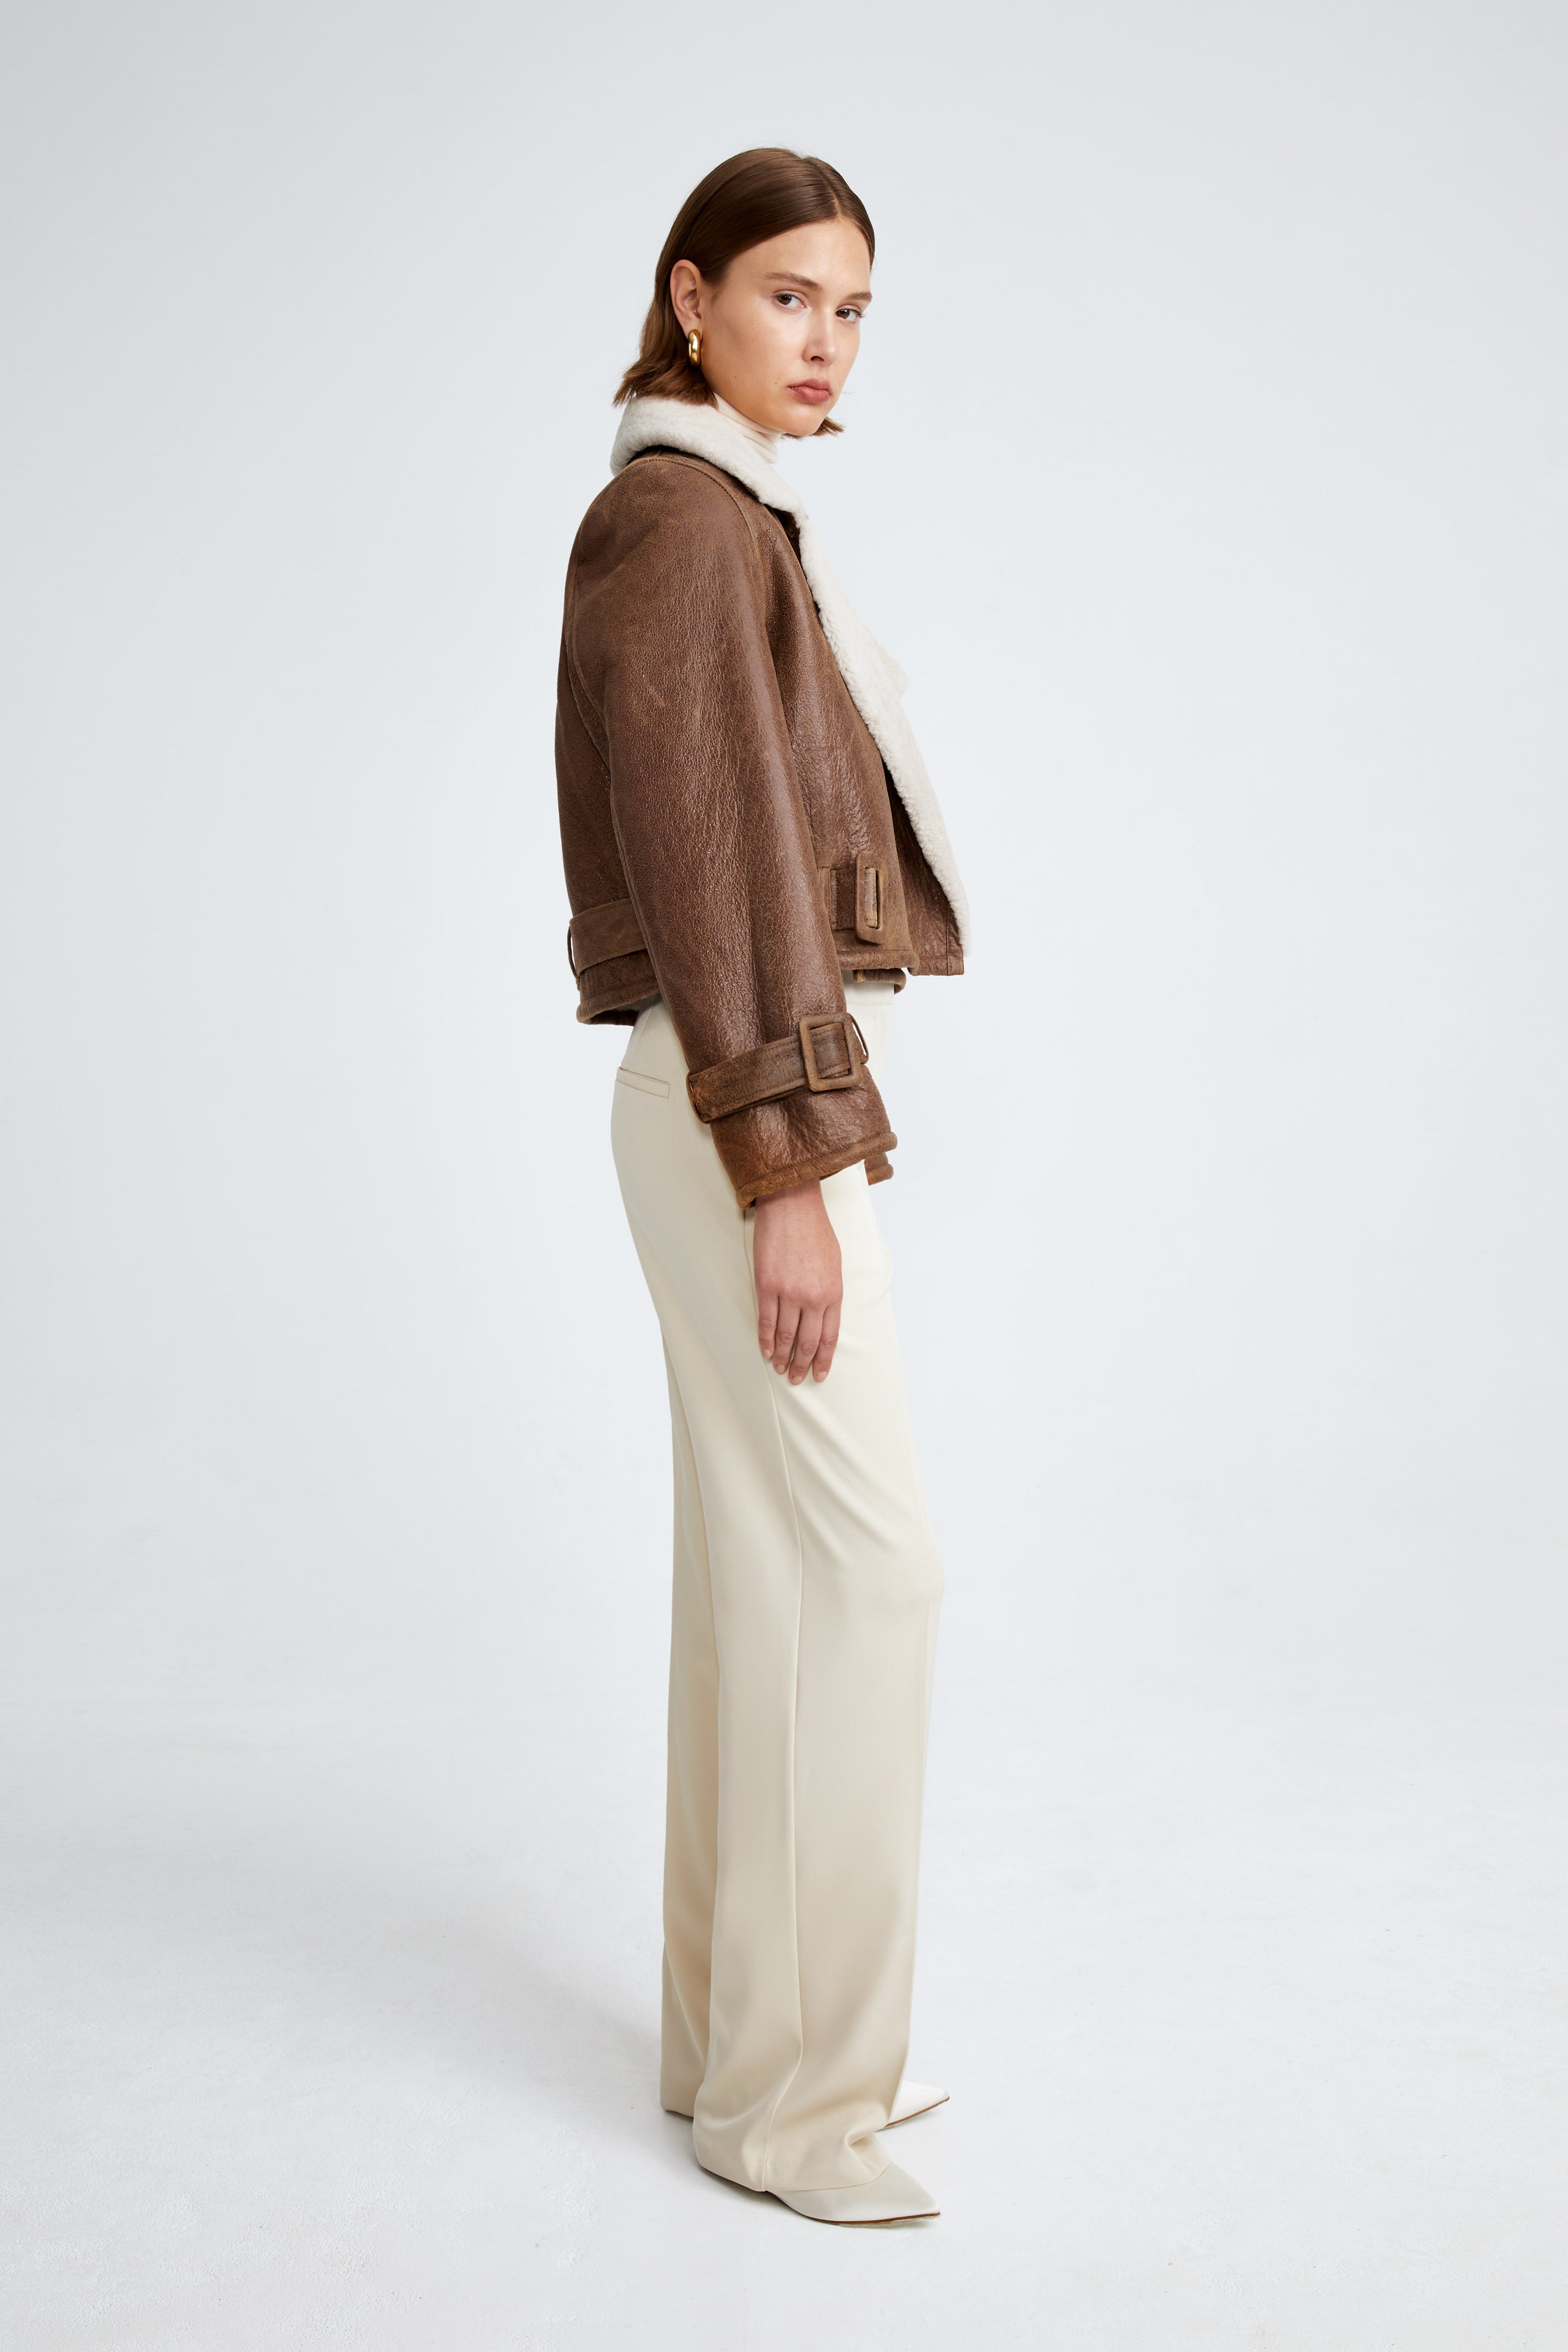 Model is wearing the Hatti Shearling Camel Ivory Cropped Shearling Jacket Side